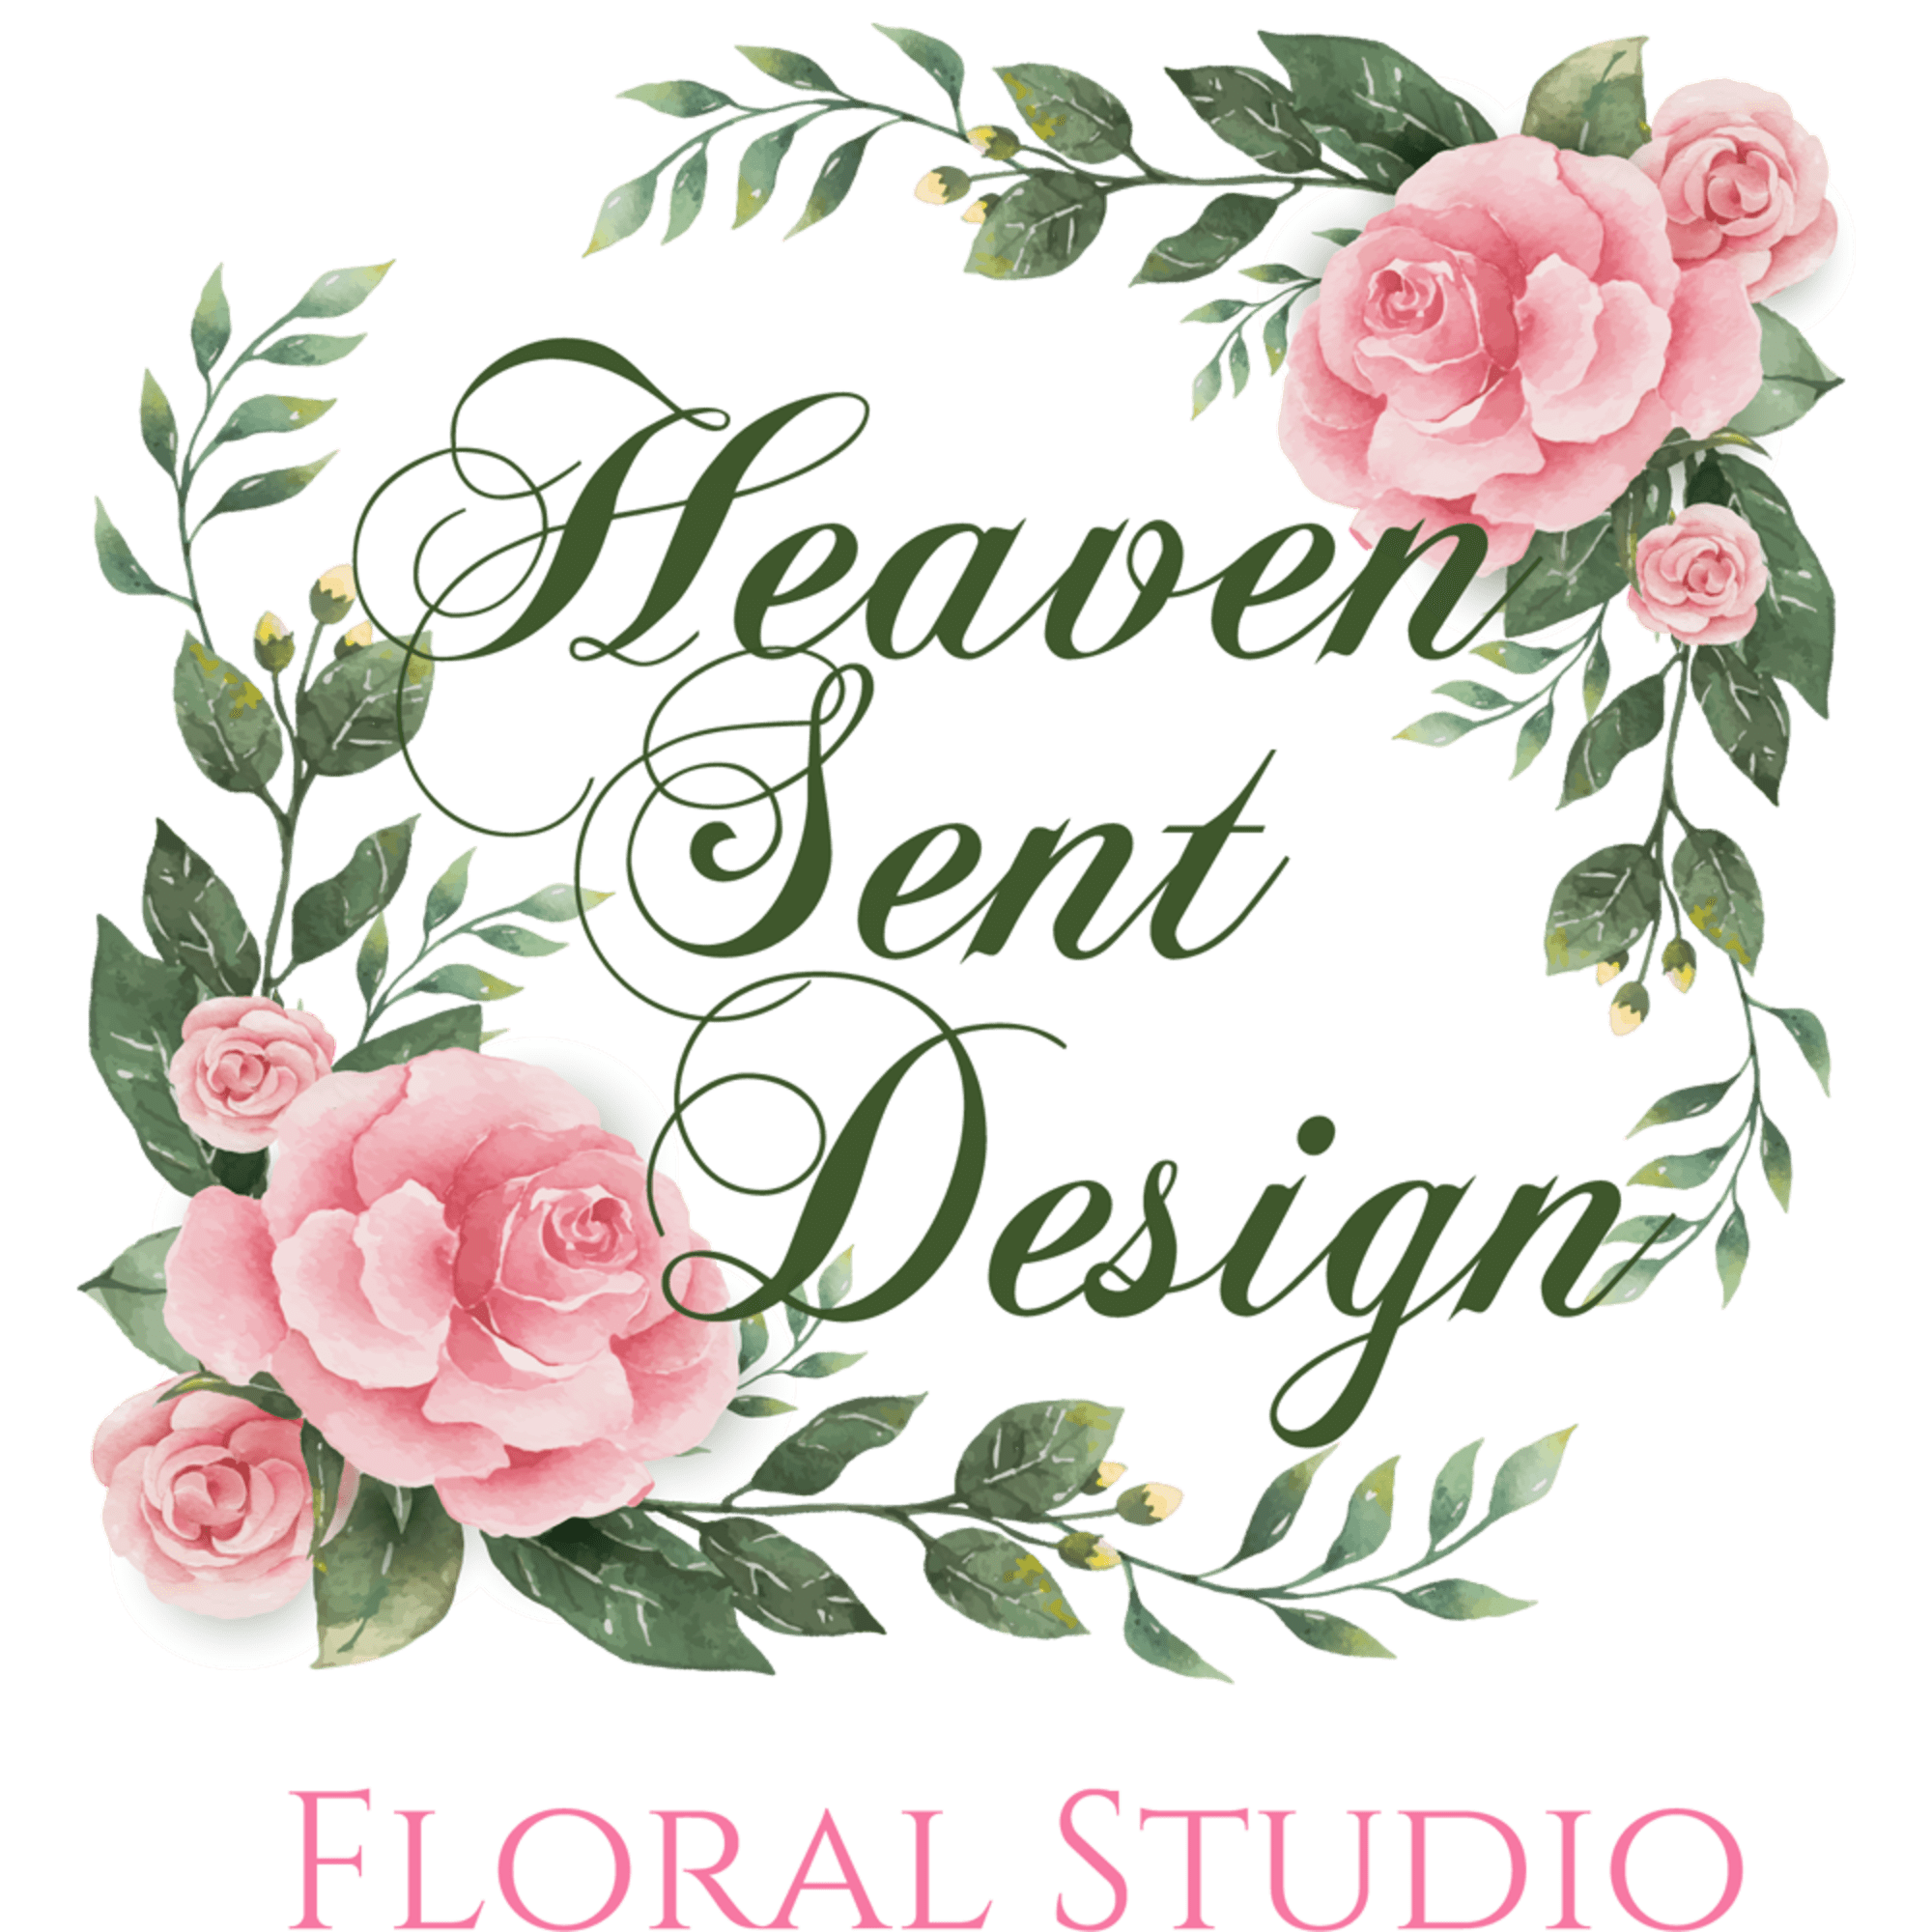 Anaheim | Floral in Sent Lavender CA Design Dreams Heaven Hills, Studio